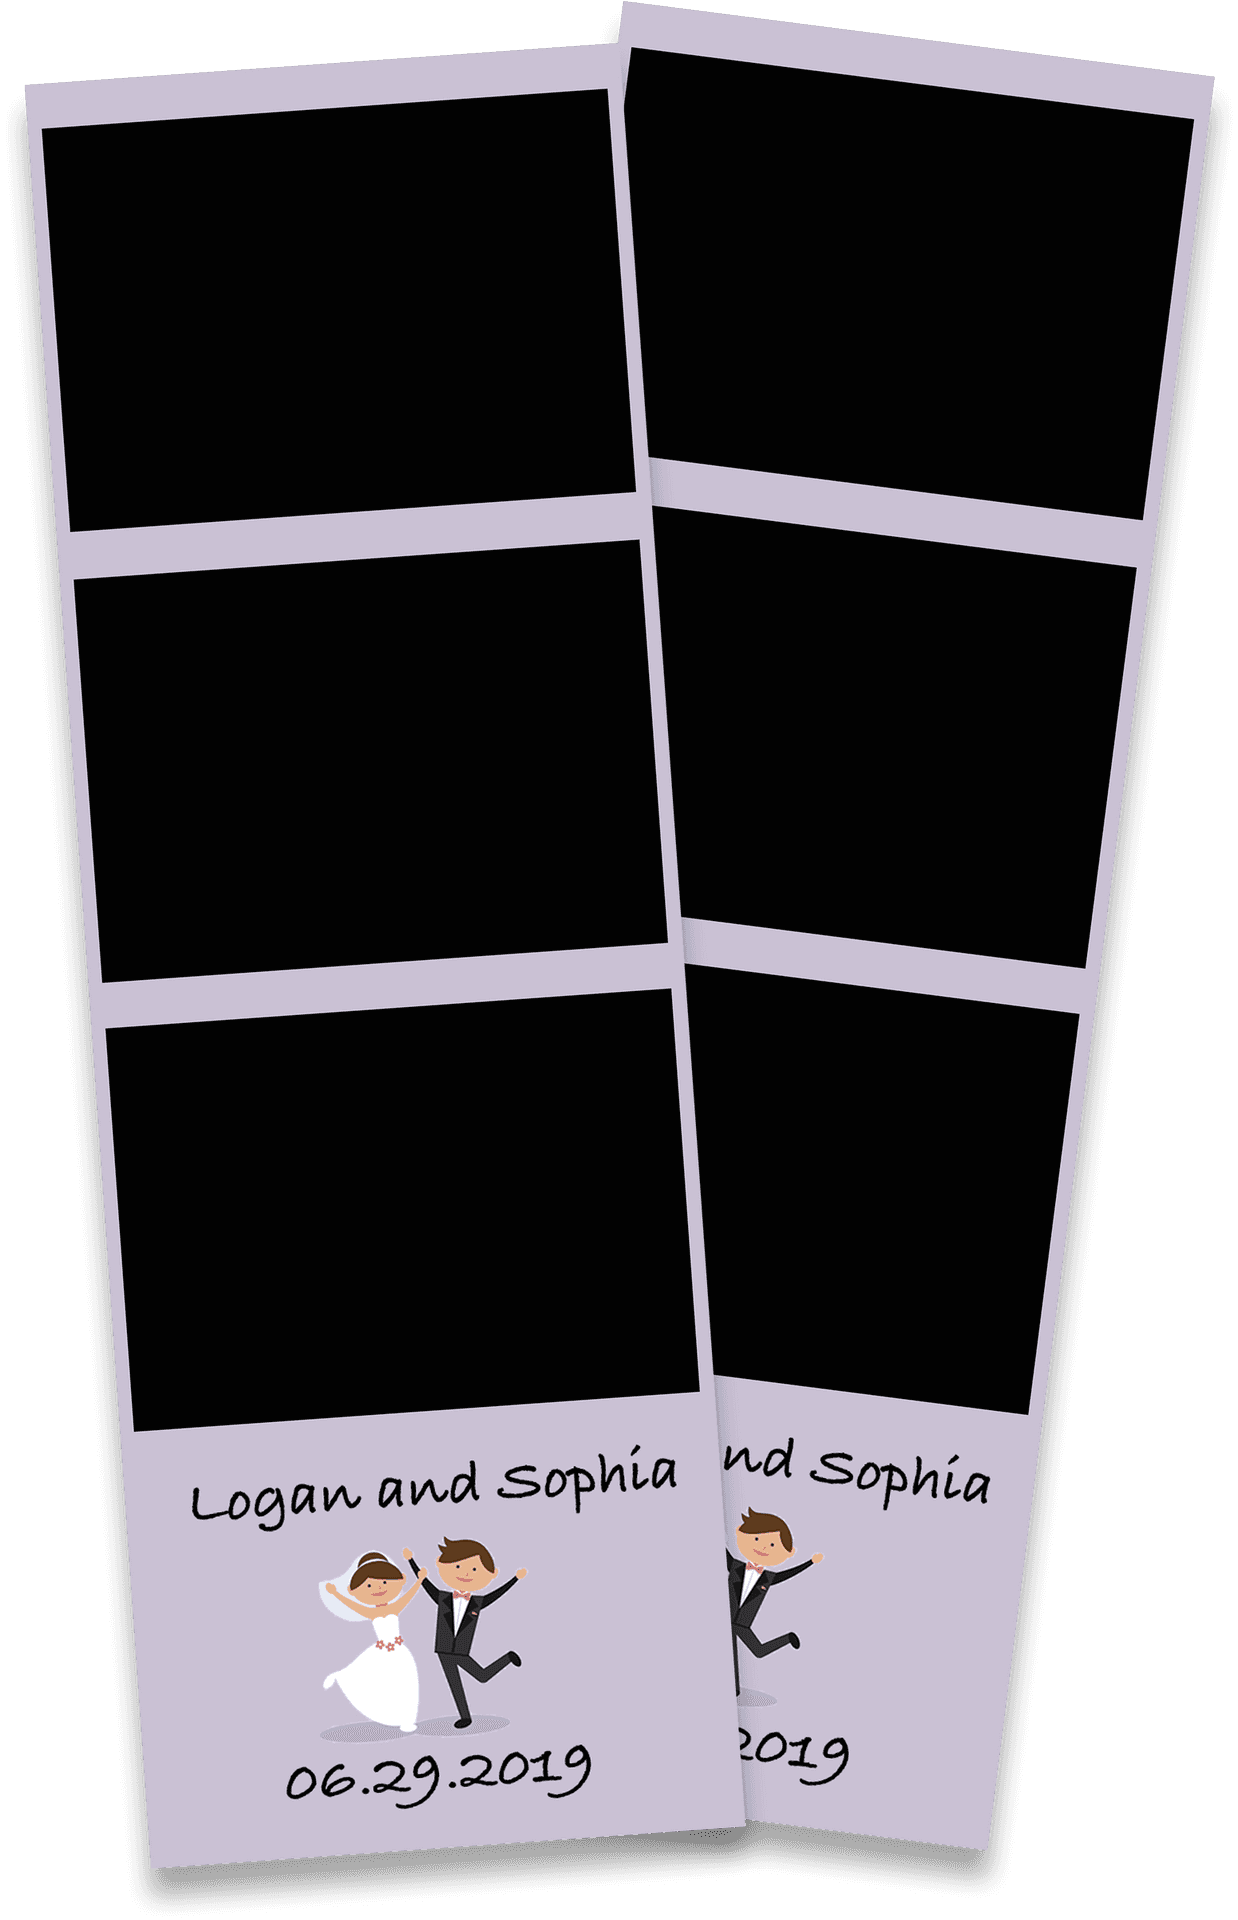 Logan And Sophia Wedding Photobooth Strips06292019 PNG